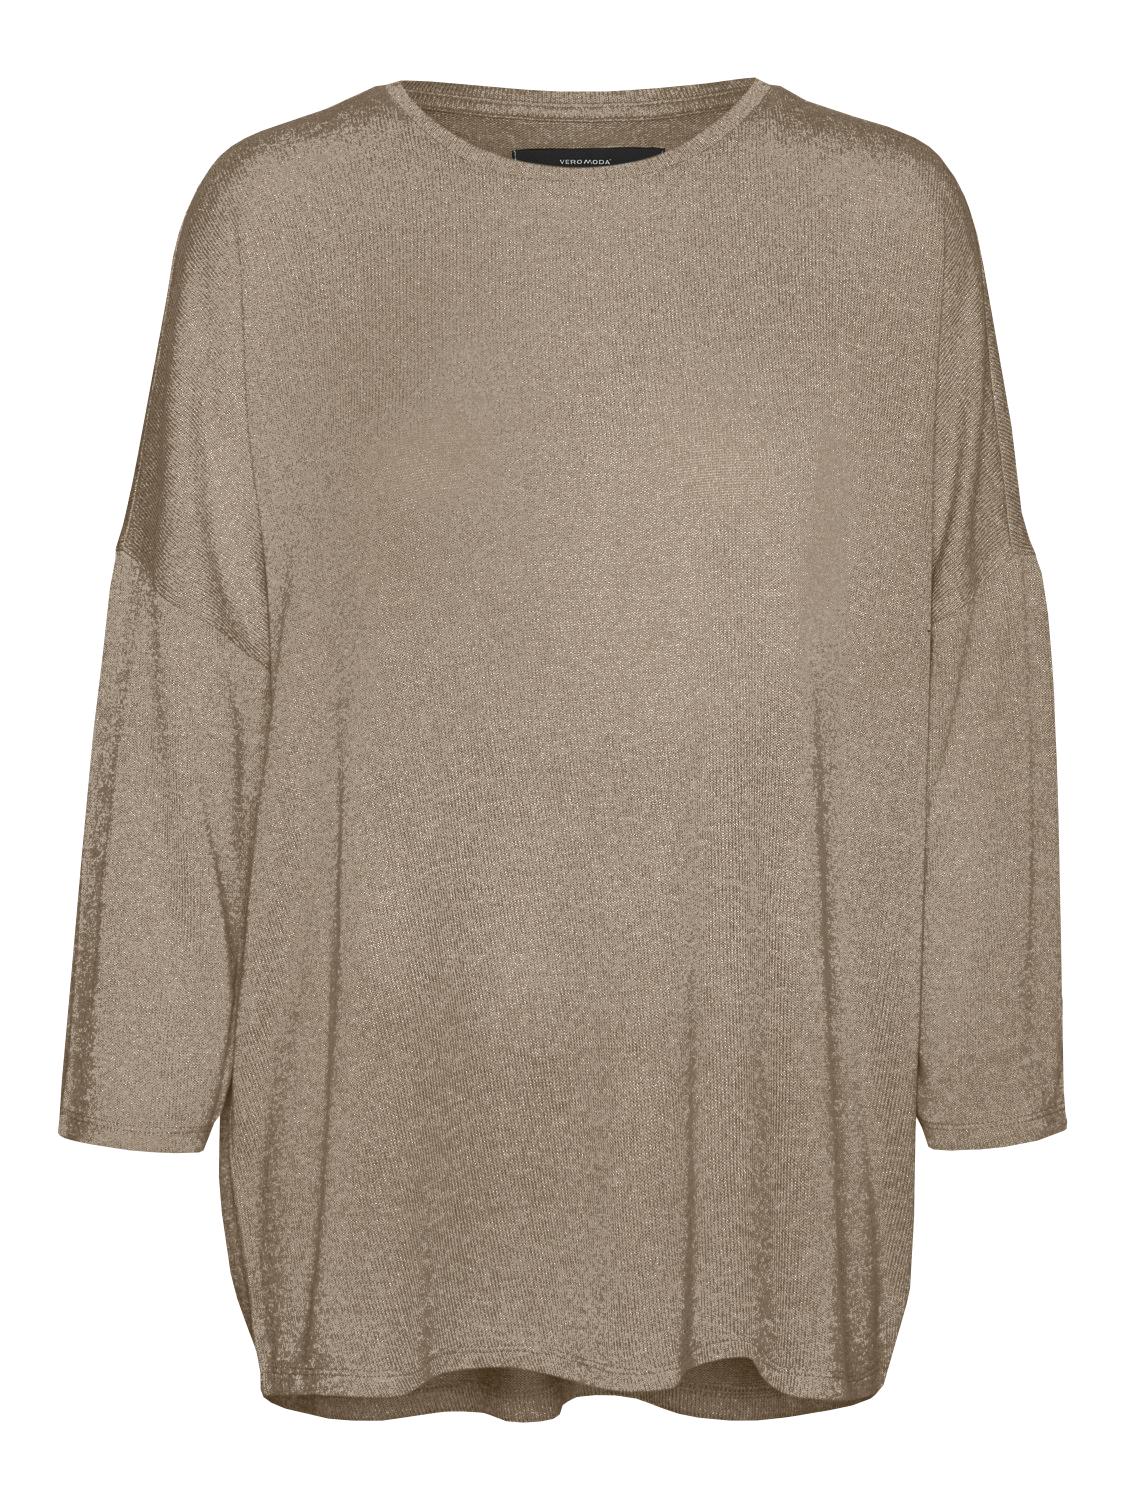 Vero Moda Loose Fit 3/4 Sleeve Pullover in Beige